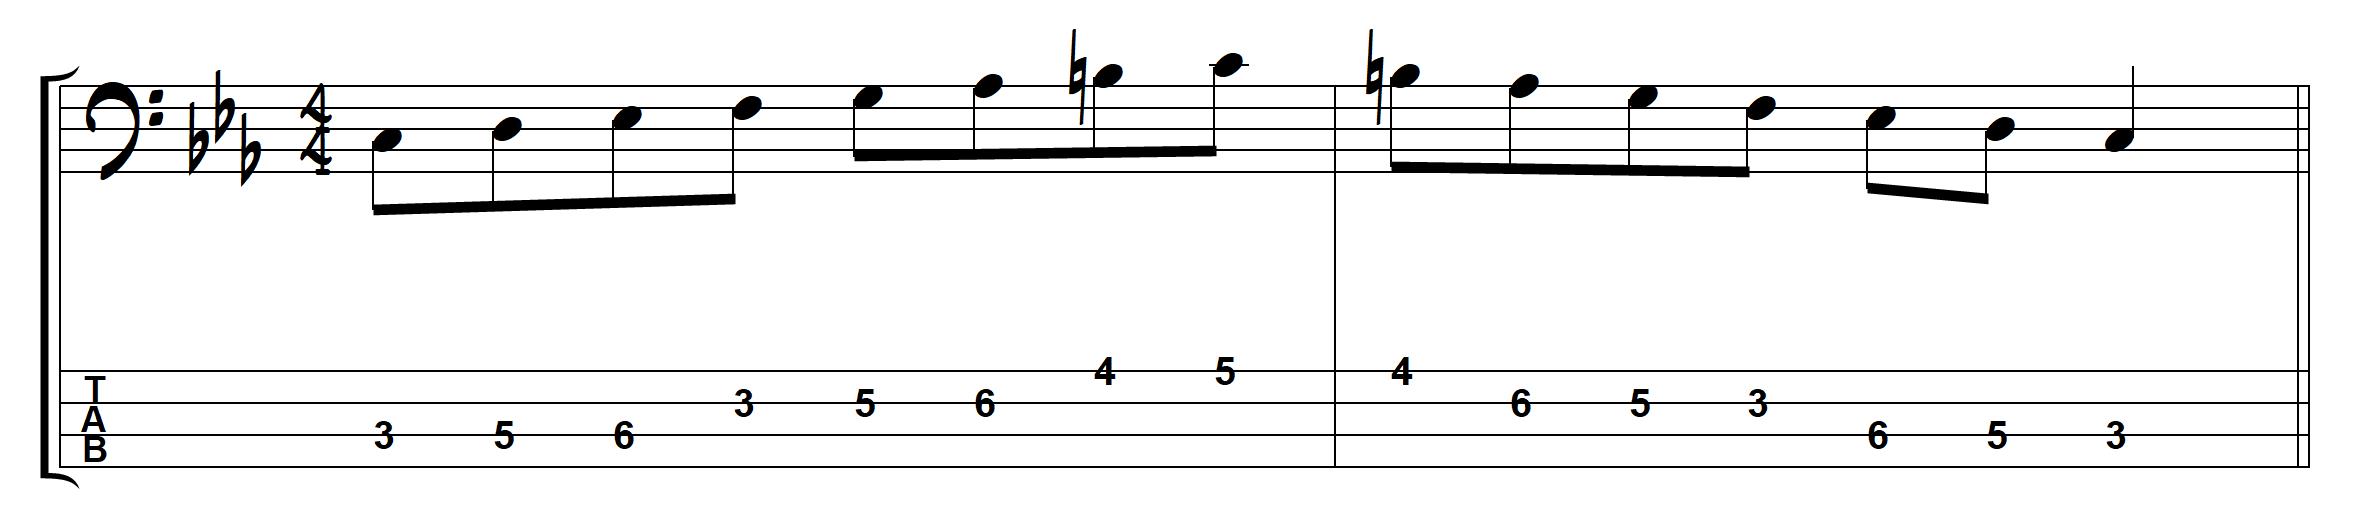 harmonic minor